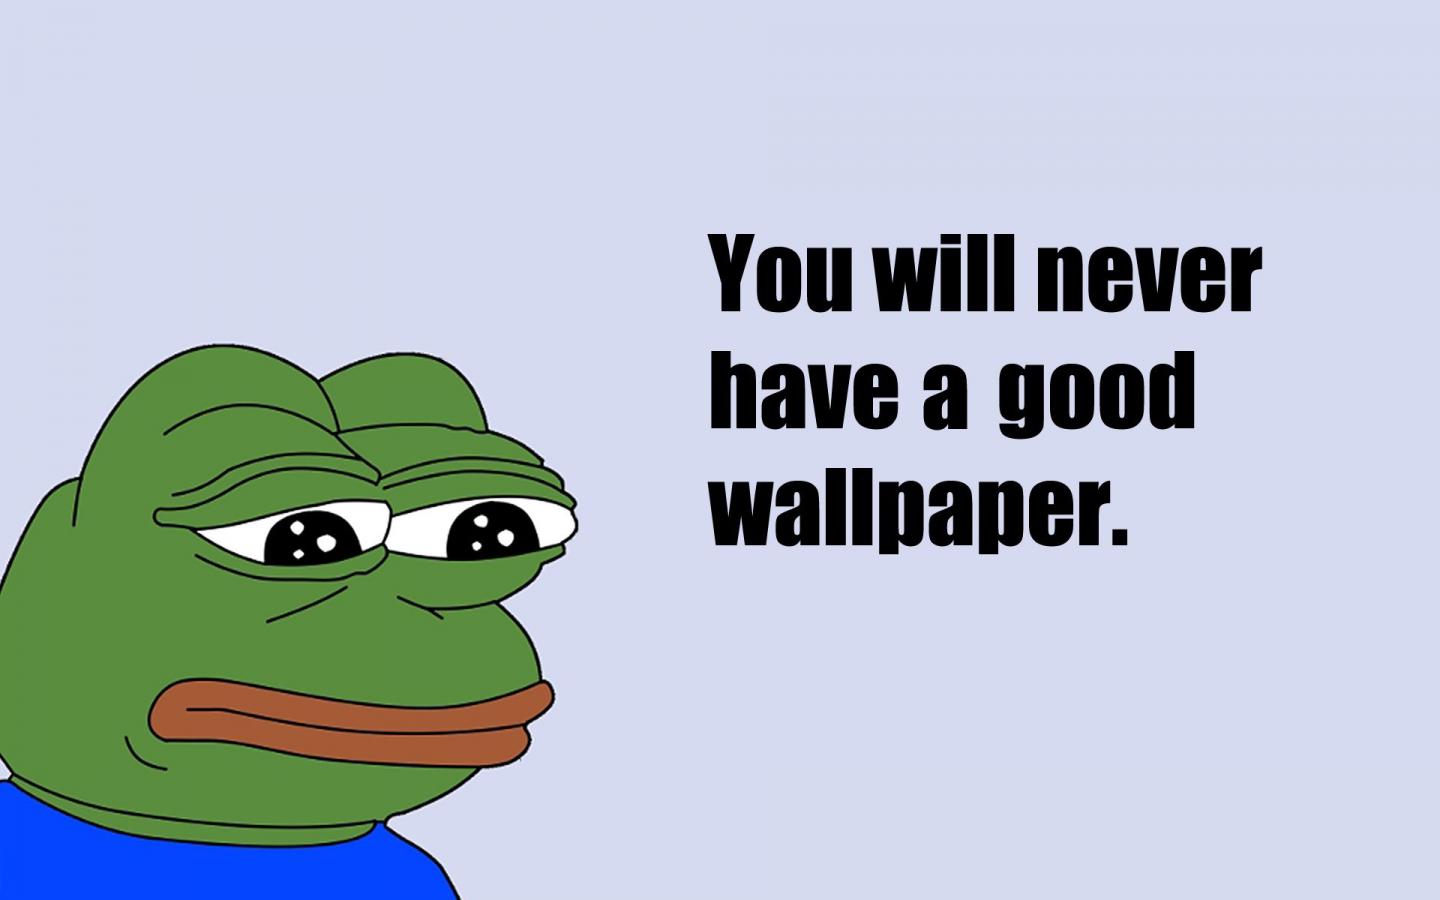 Sad frog - Sad frog says you will never have a good wallpaper